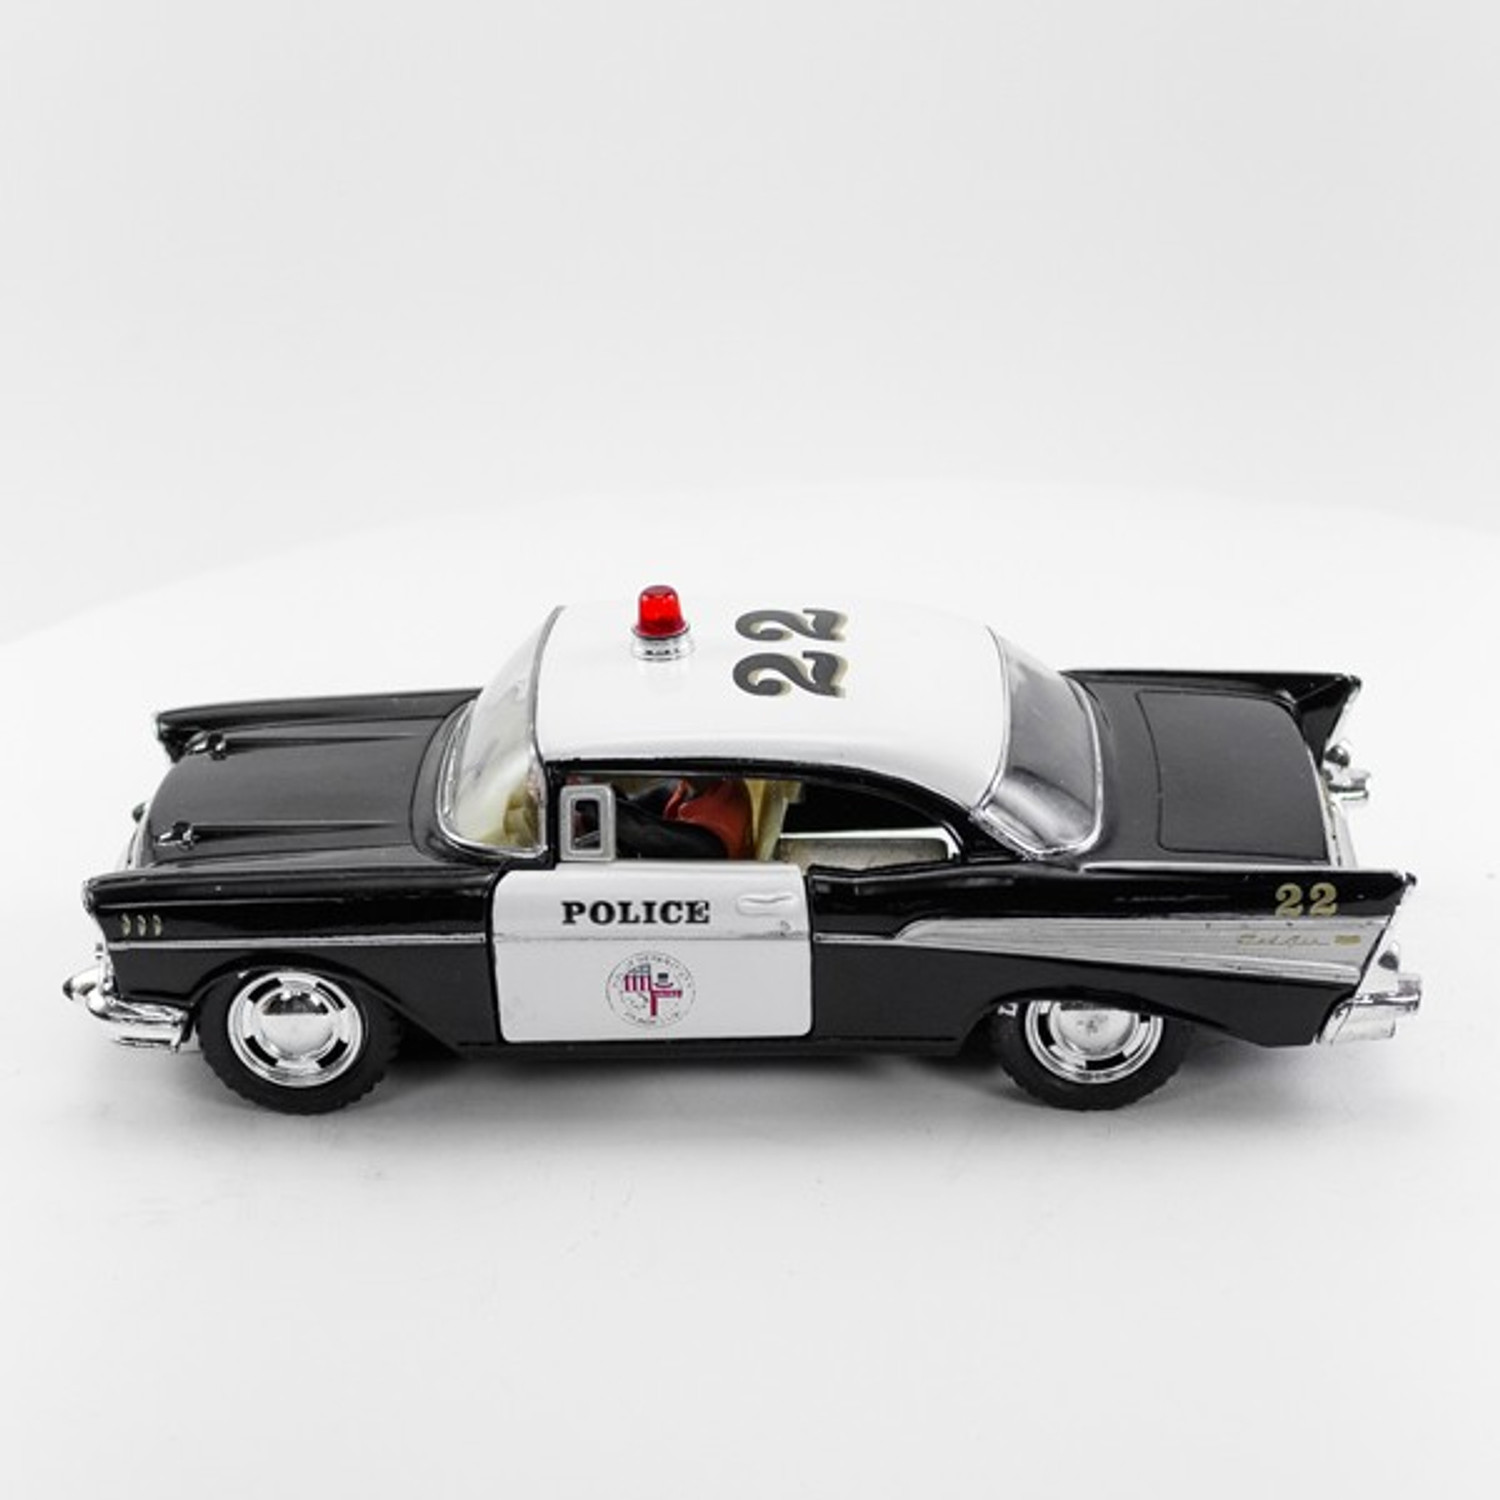 Stock Number 16173: Black Police Car 57 Chev by SCX